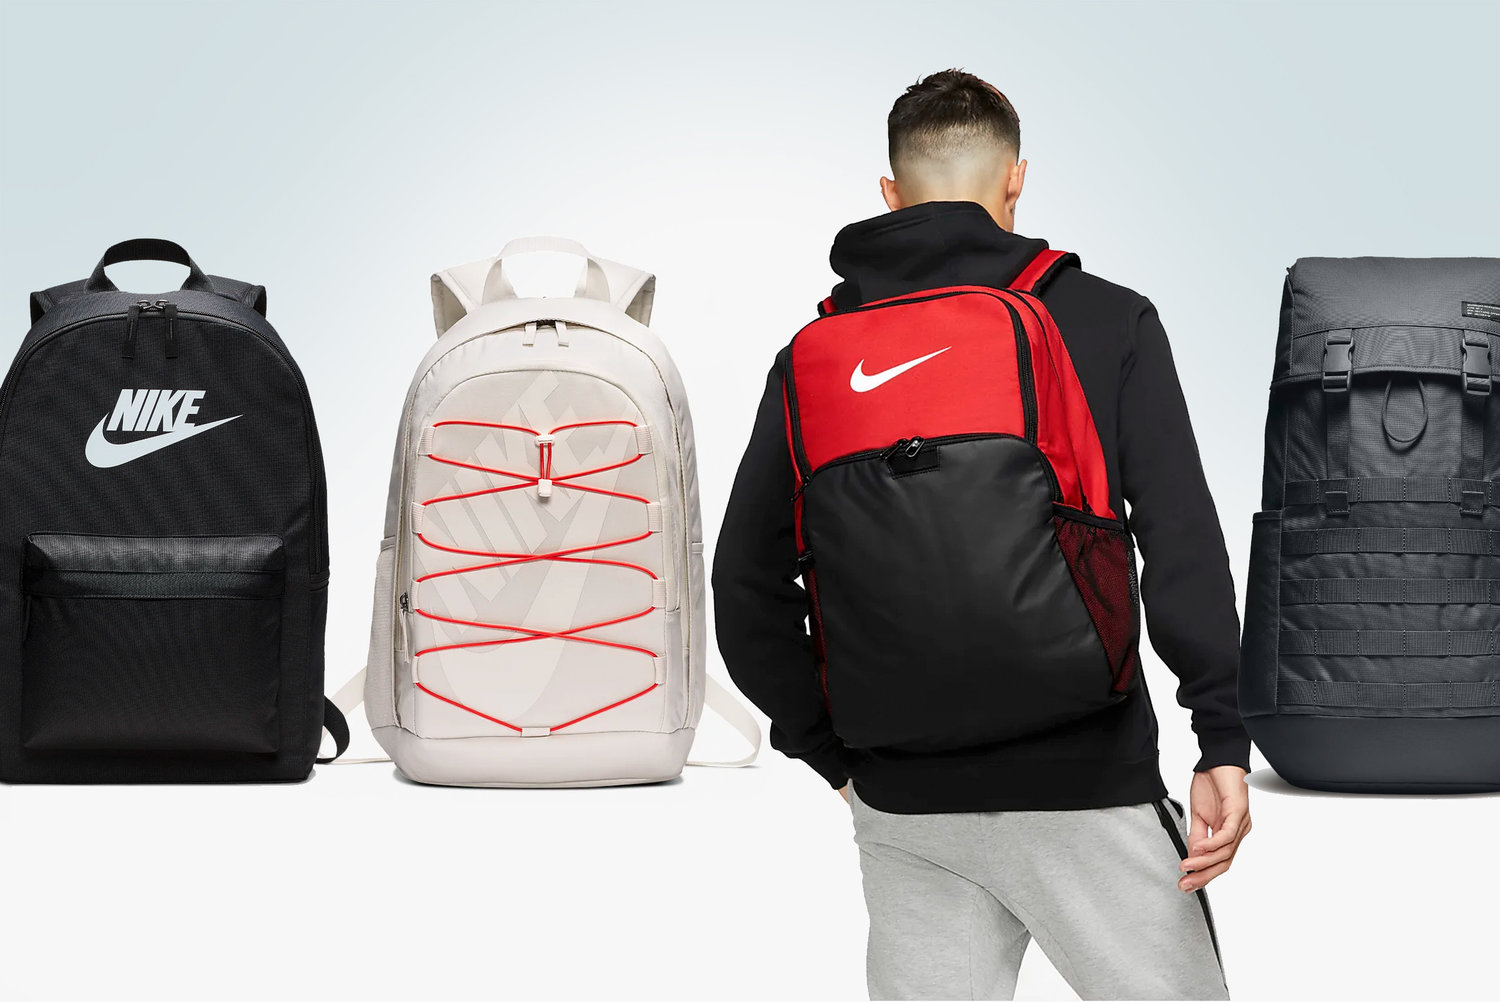 Best Nike Backpacks For School Ultimate 2019 Buying Guide